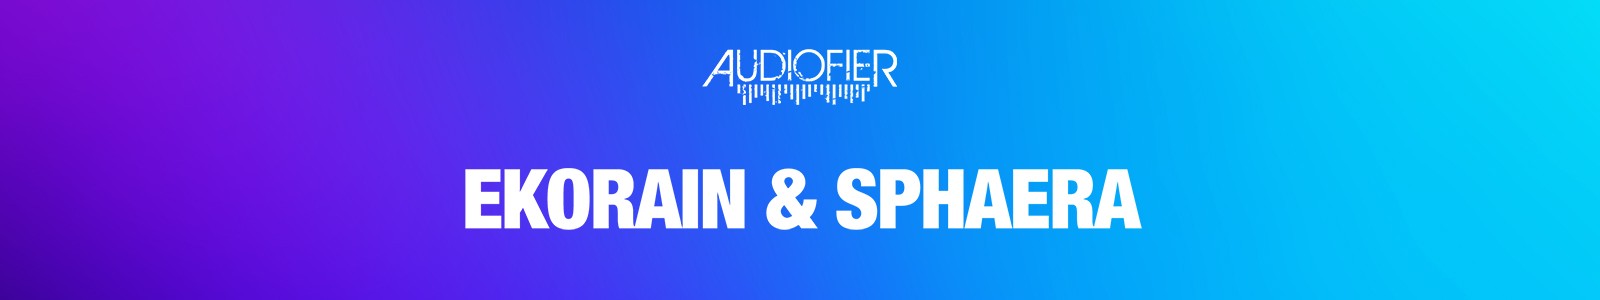 Audiofier Ekorain & Sphaera Bundle